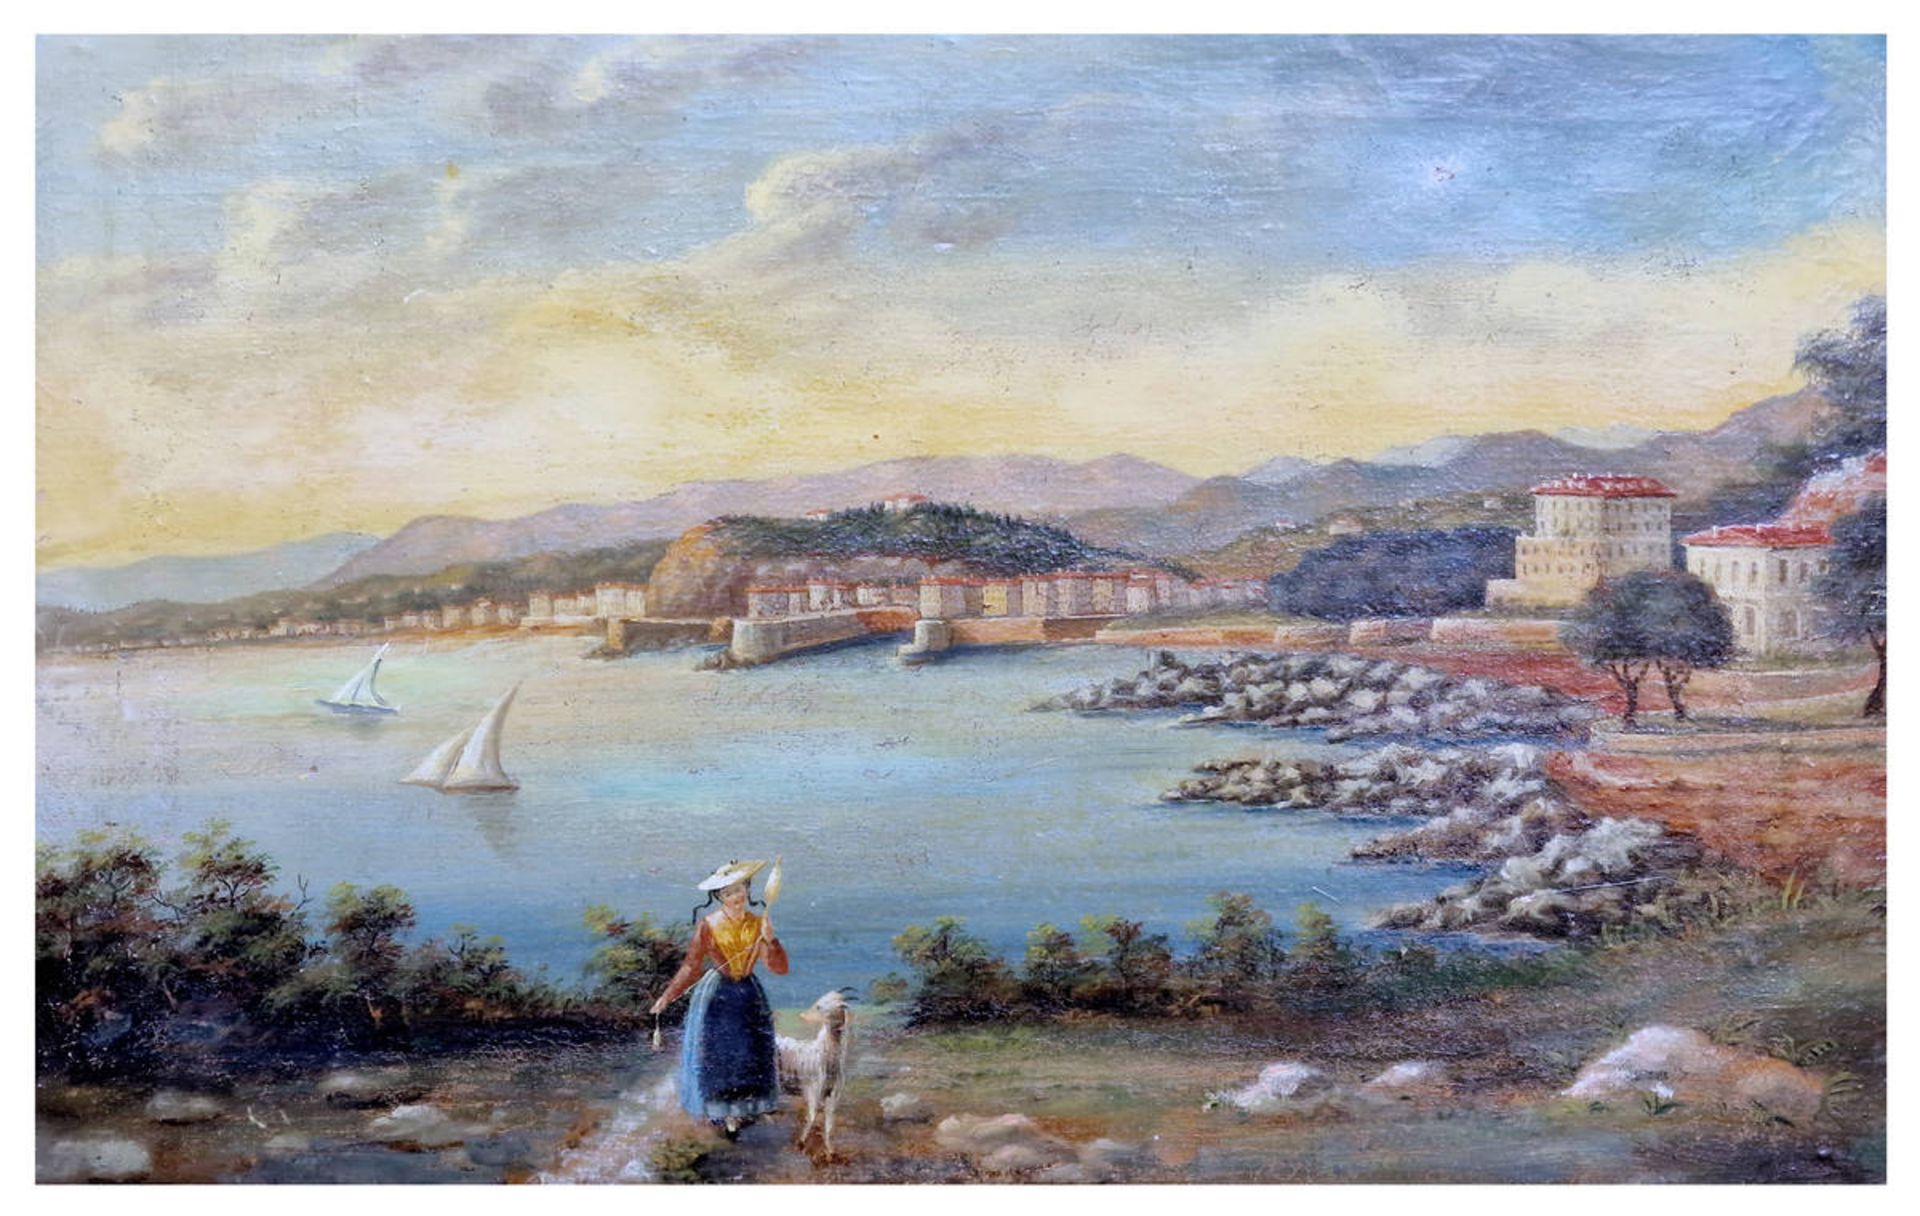 VUE DU PORT DE NICE, FRANCE ca. 1860